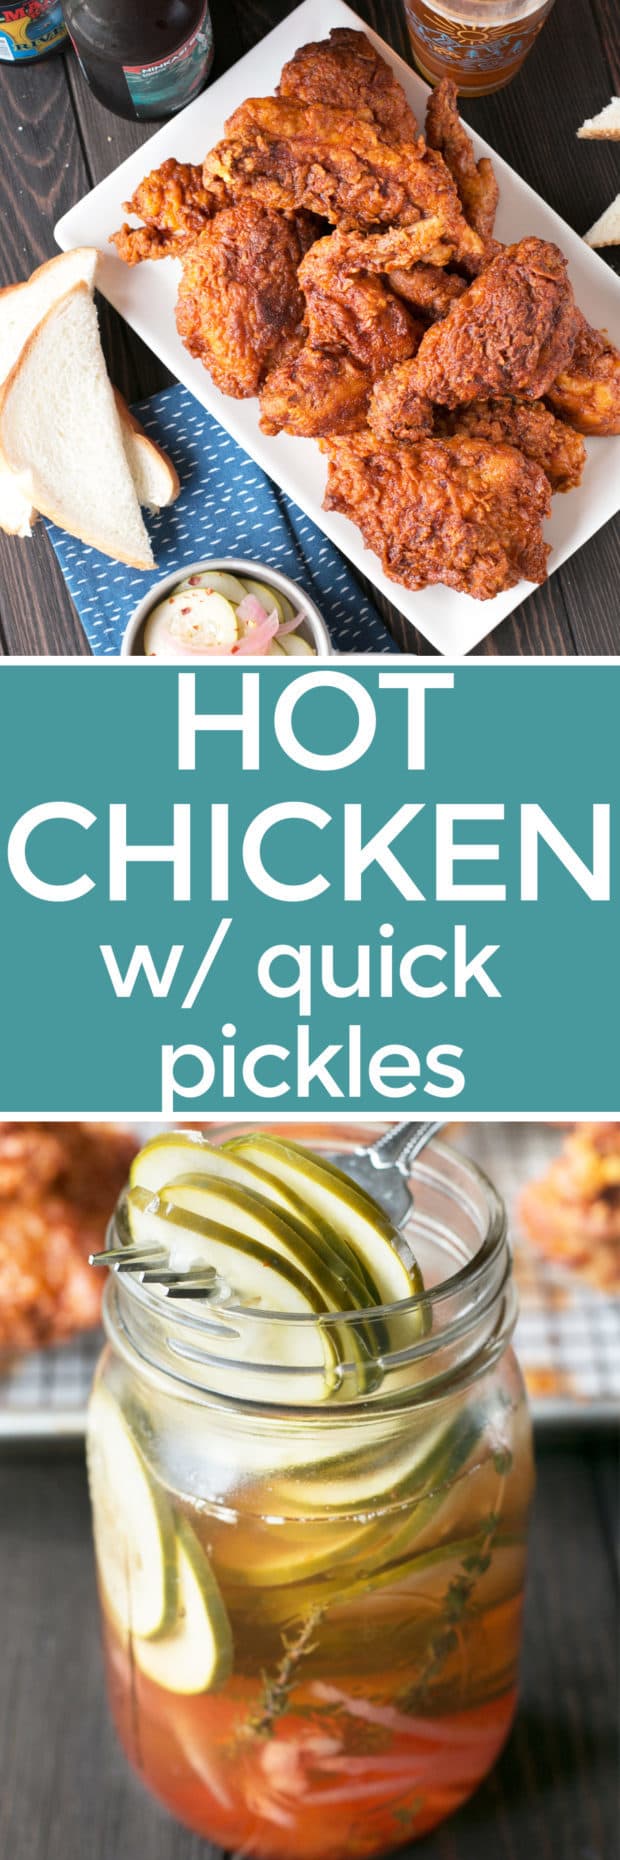 Hot Chicken with Homemade Quick Pickles | cakenknife.com #dinner #southern #nashville #friedchicken